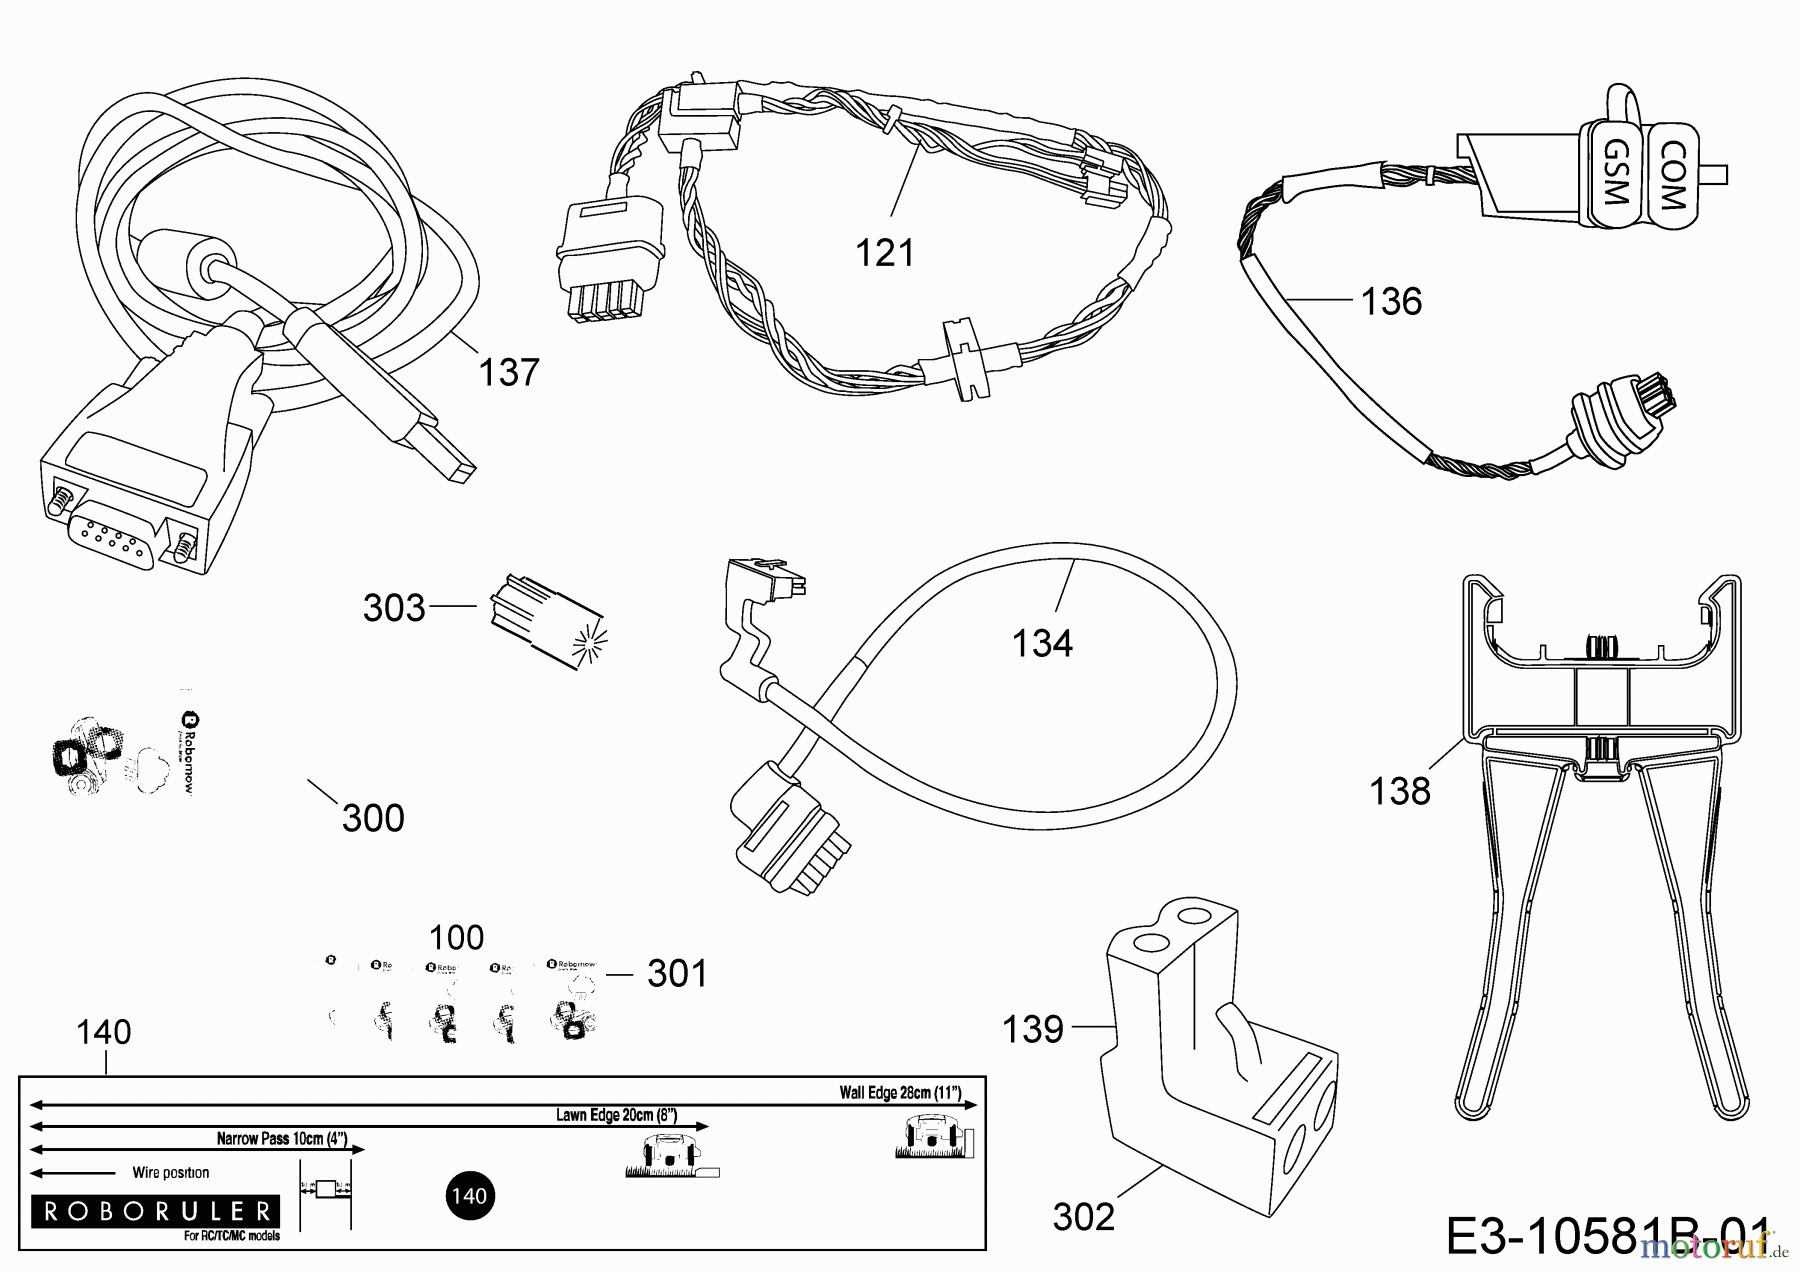  Robomow Mähroboter RC304 (Green) PRD7004C  (2016) Kabel, Kabelanschluß, Regensensor, Werkzeug